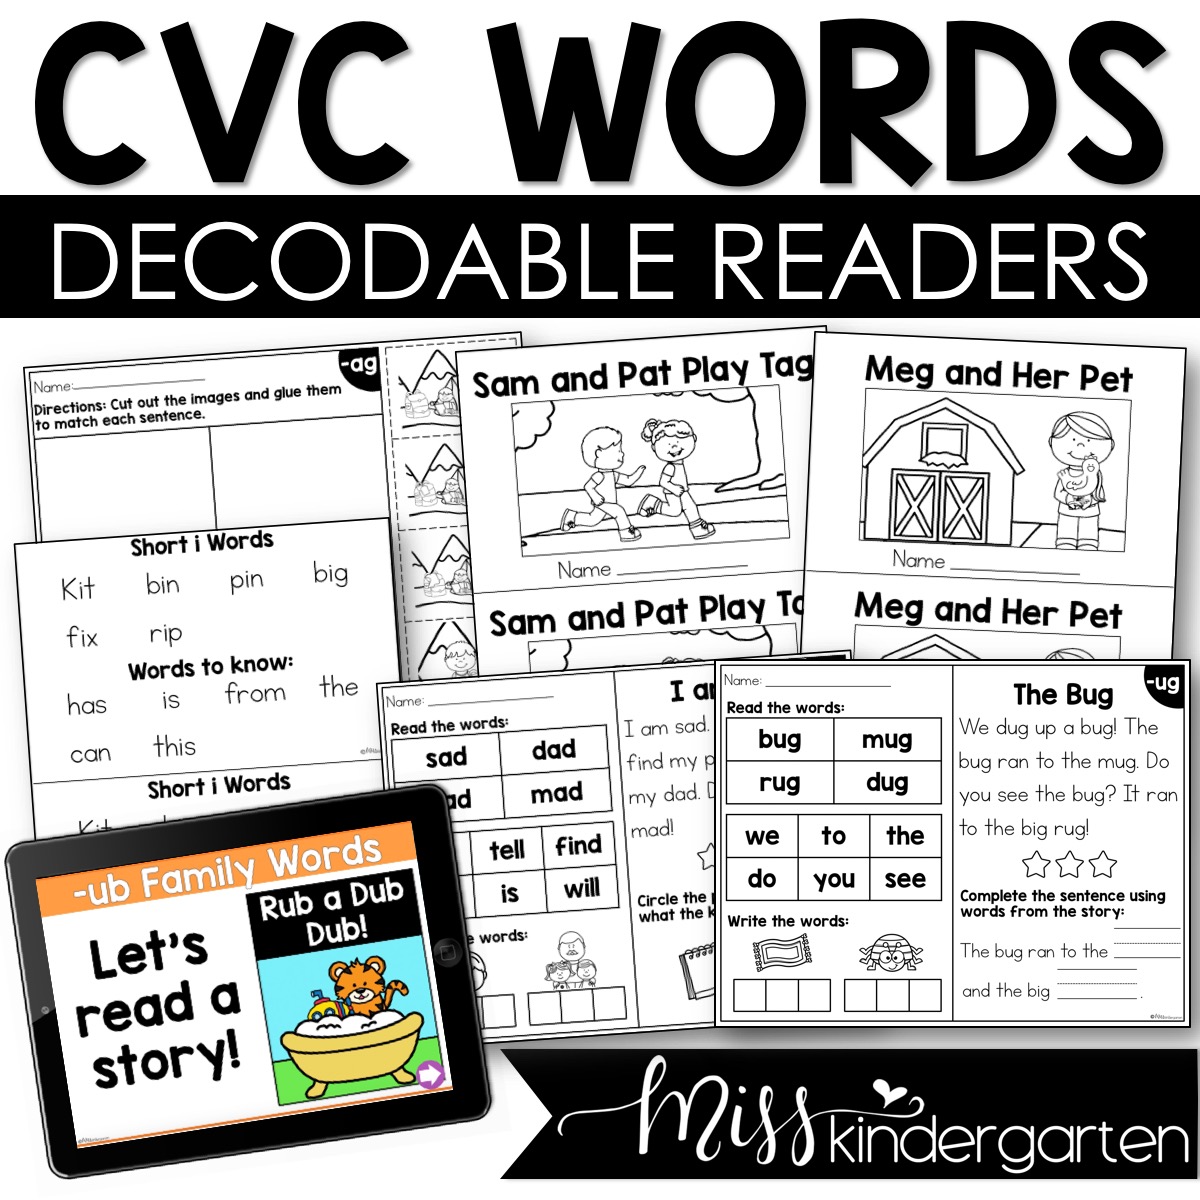 cvc-words-decodable-readers-kindergarten-small-group-reading-books